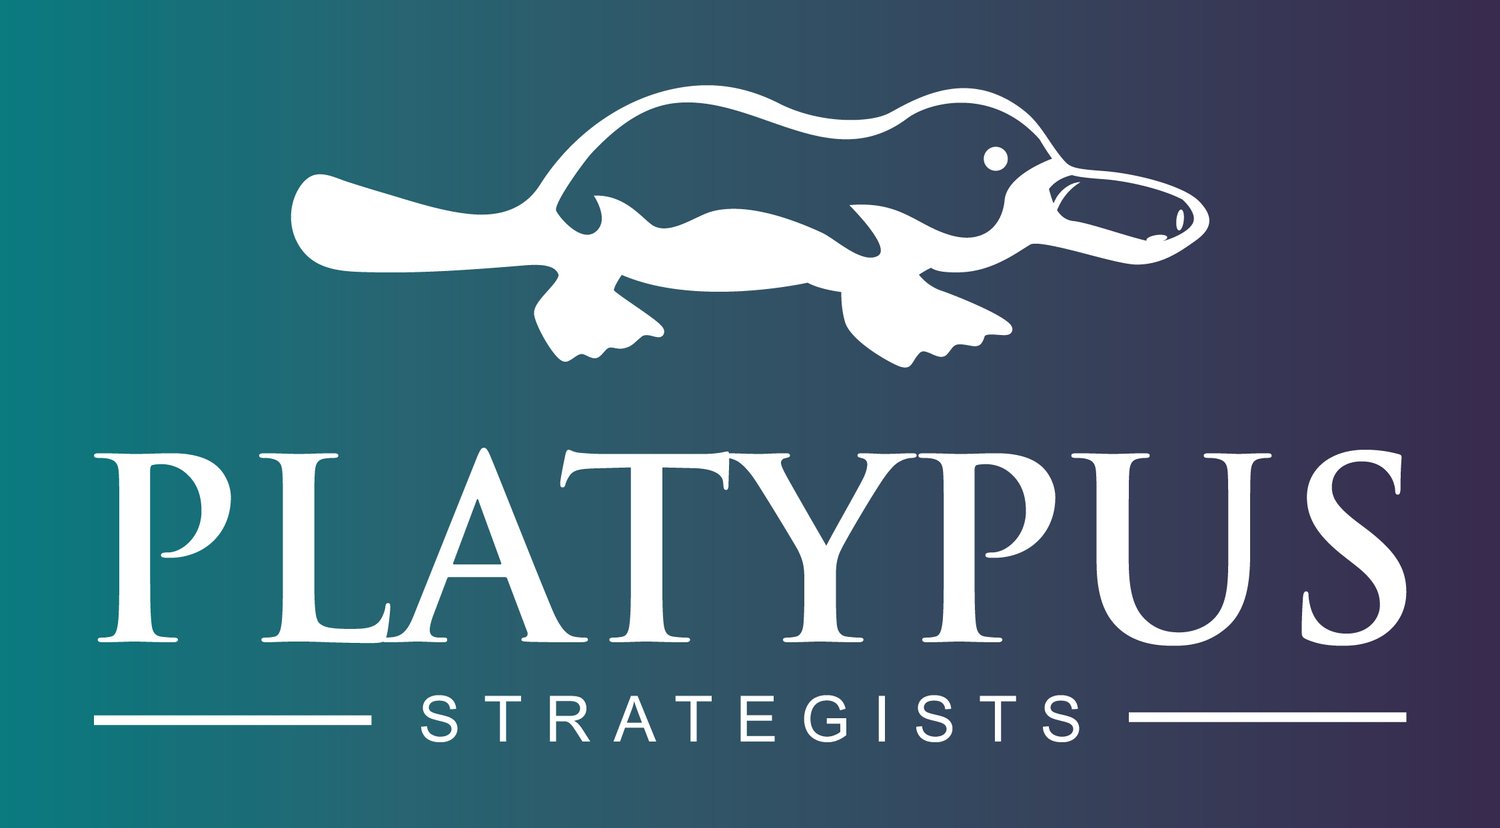      Platypus Strategists